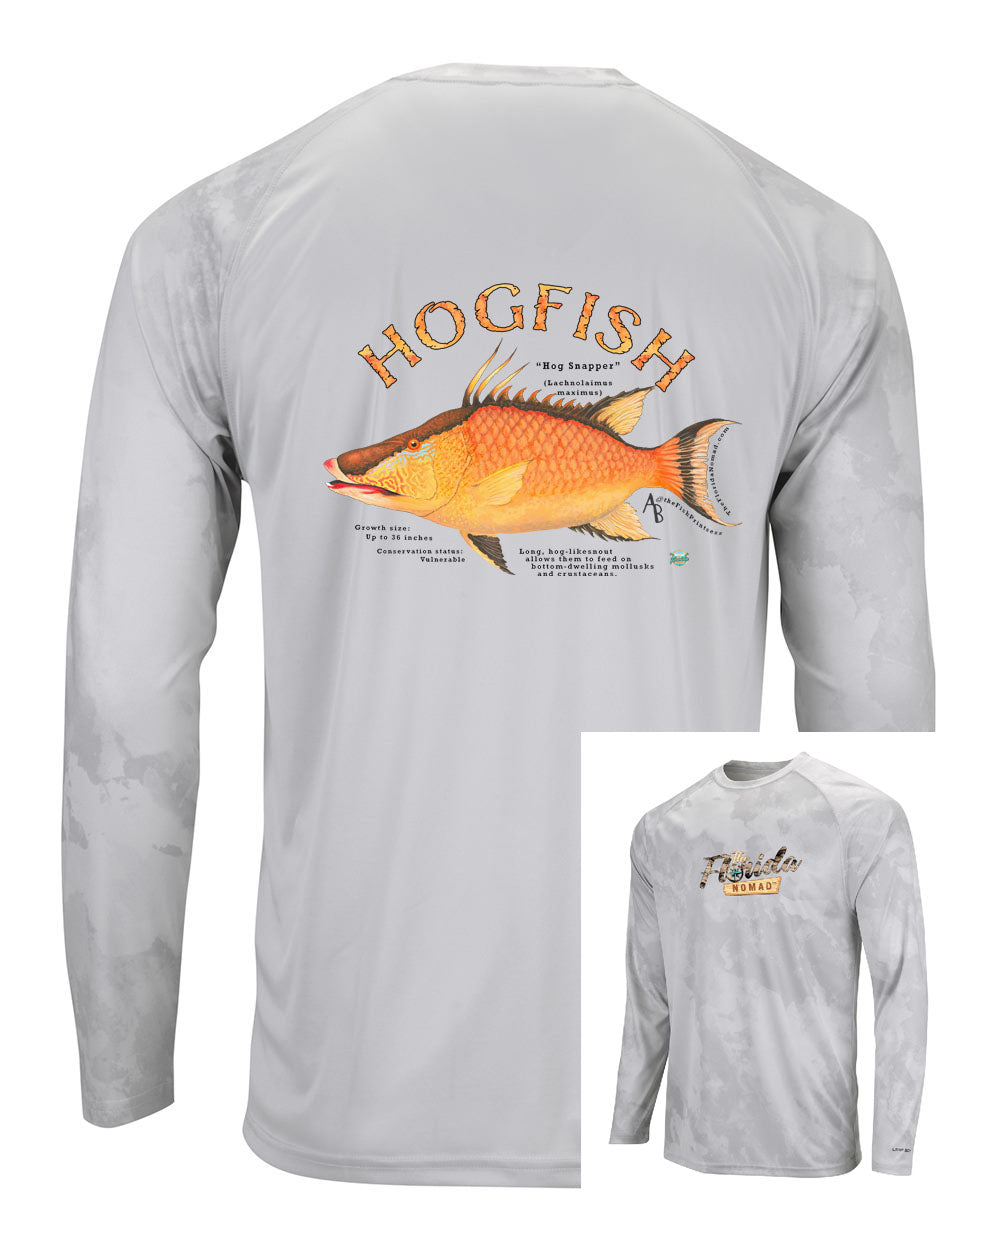 Hogfish Shirt: by Artist, Alyssa Baruch